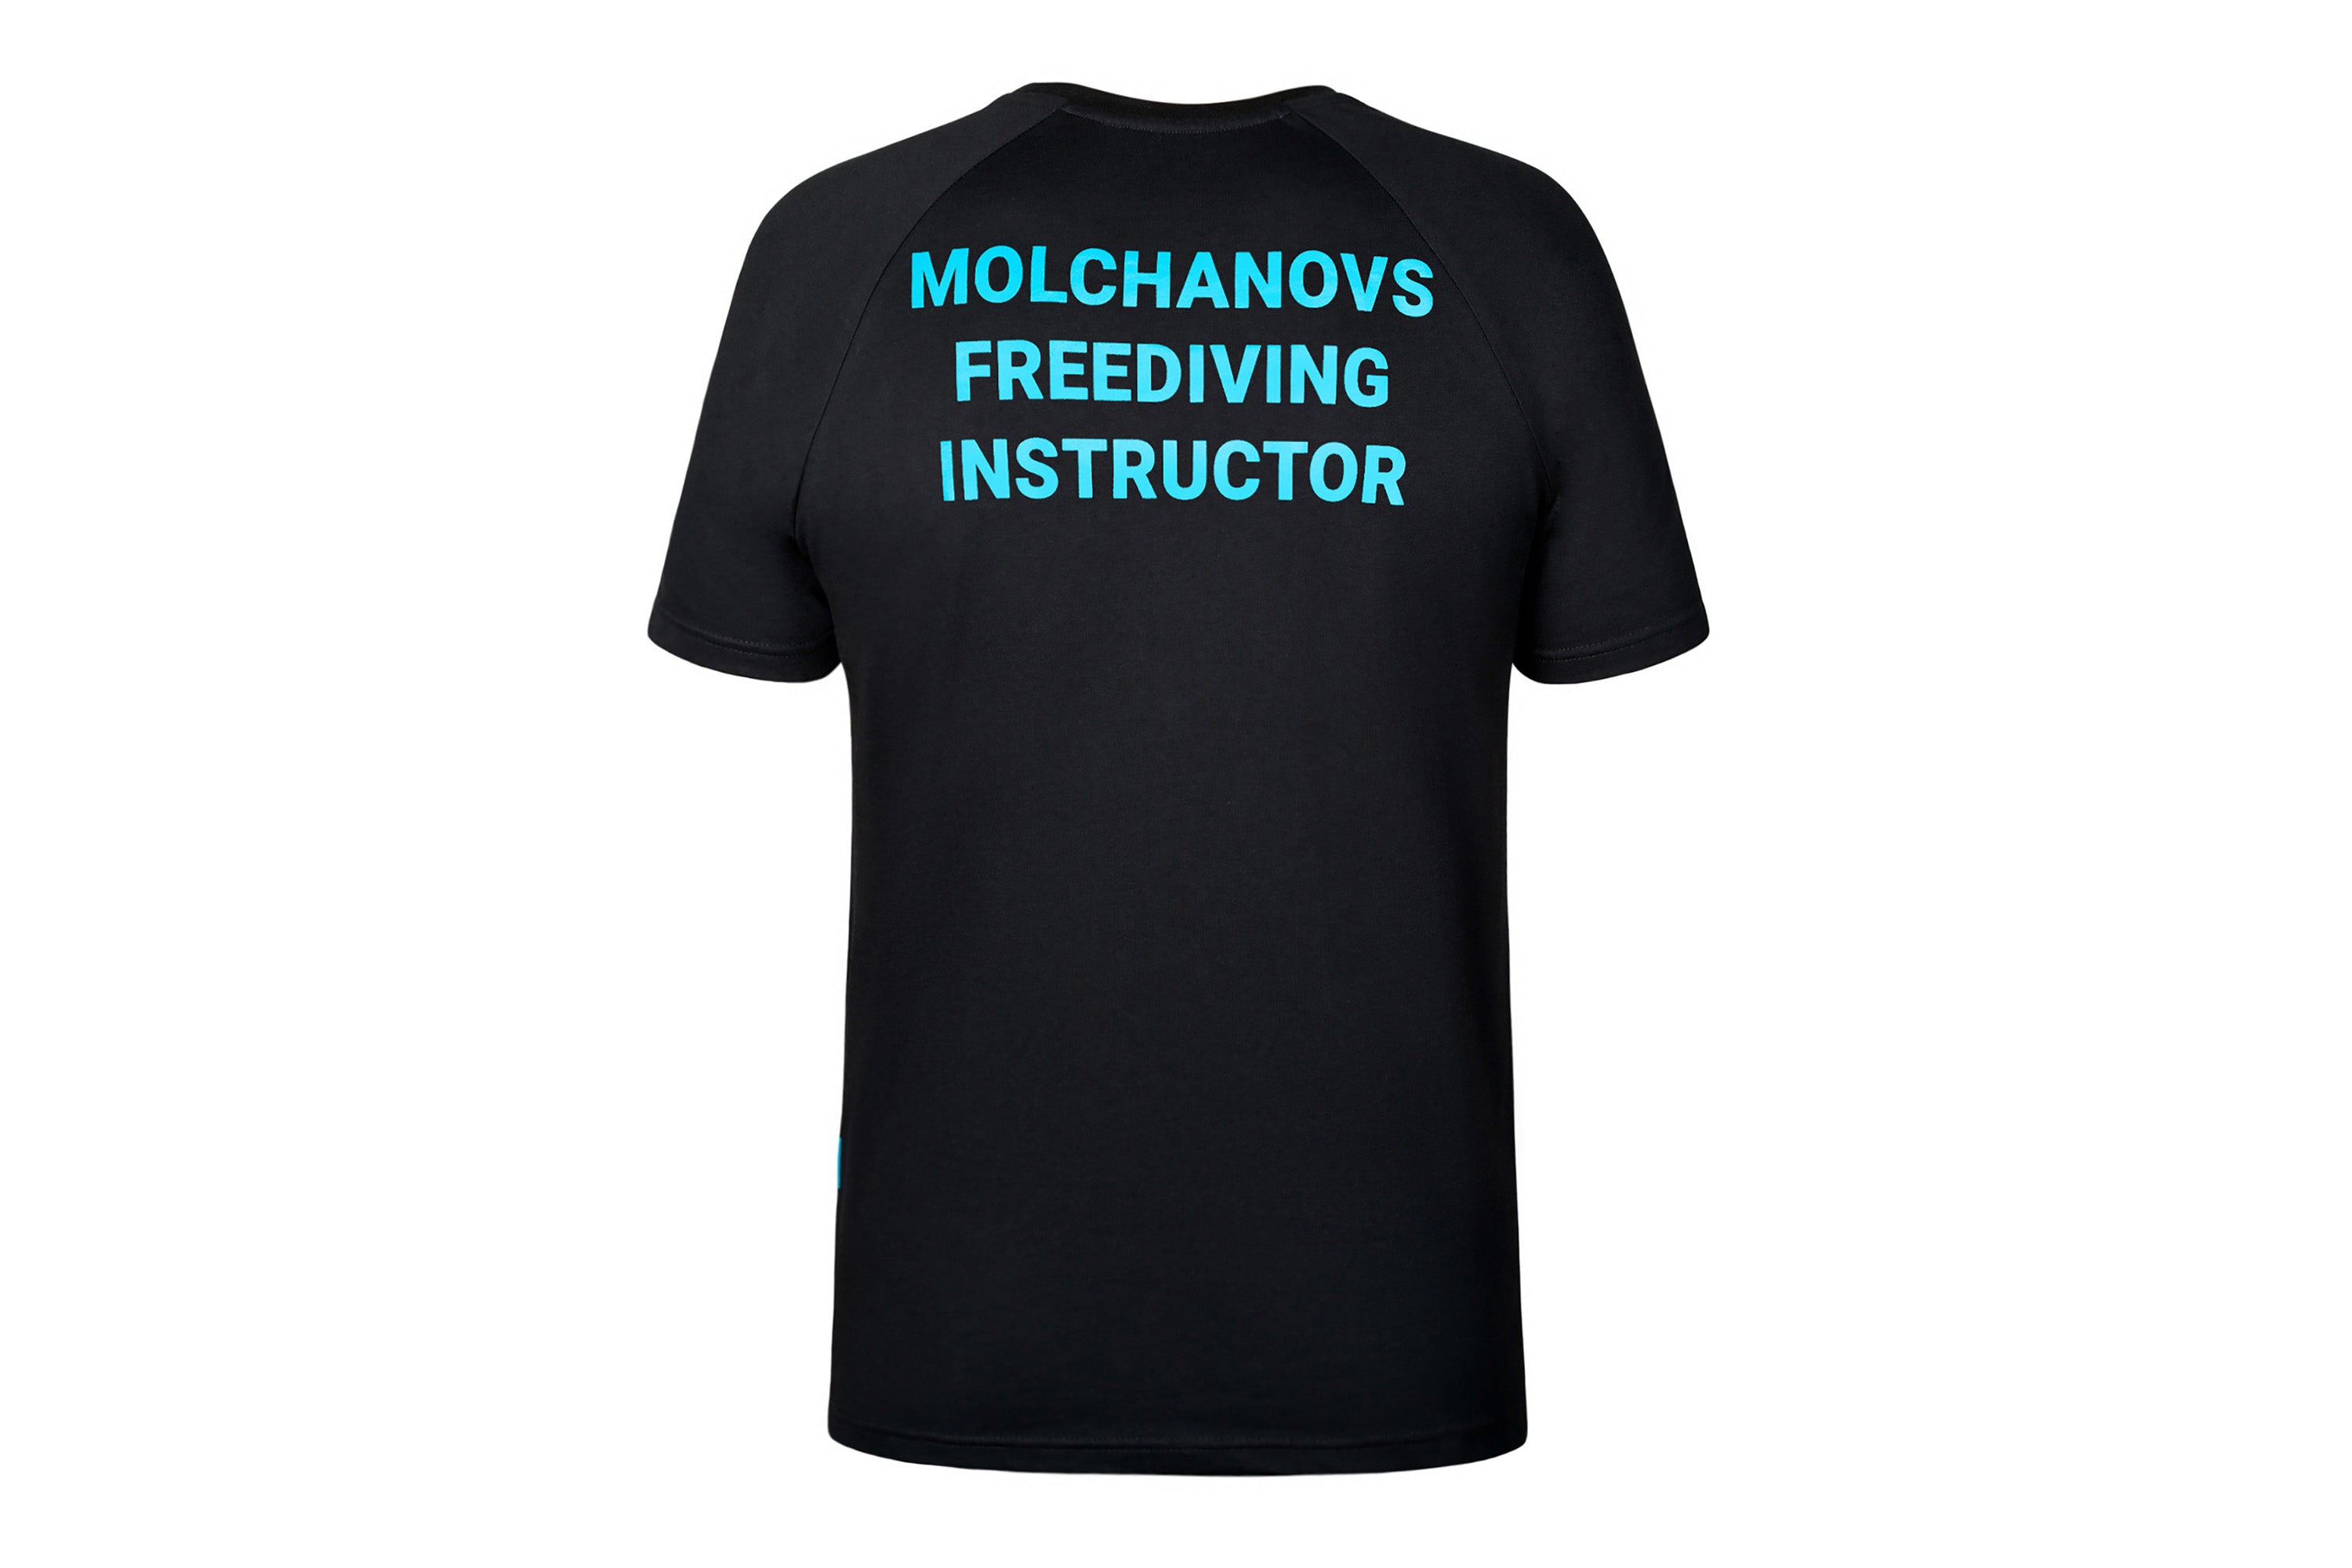 Molchanovs Freediving Instructor Tee